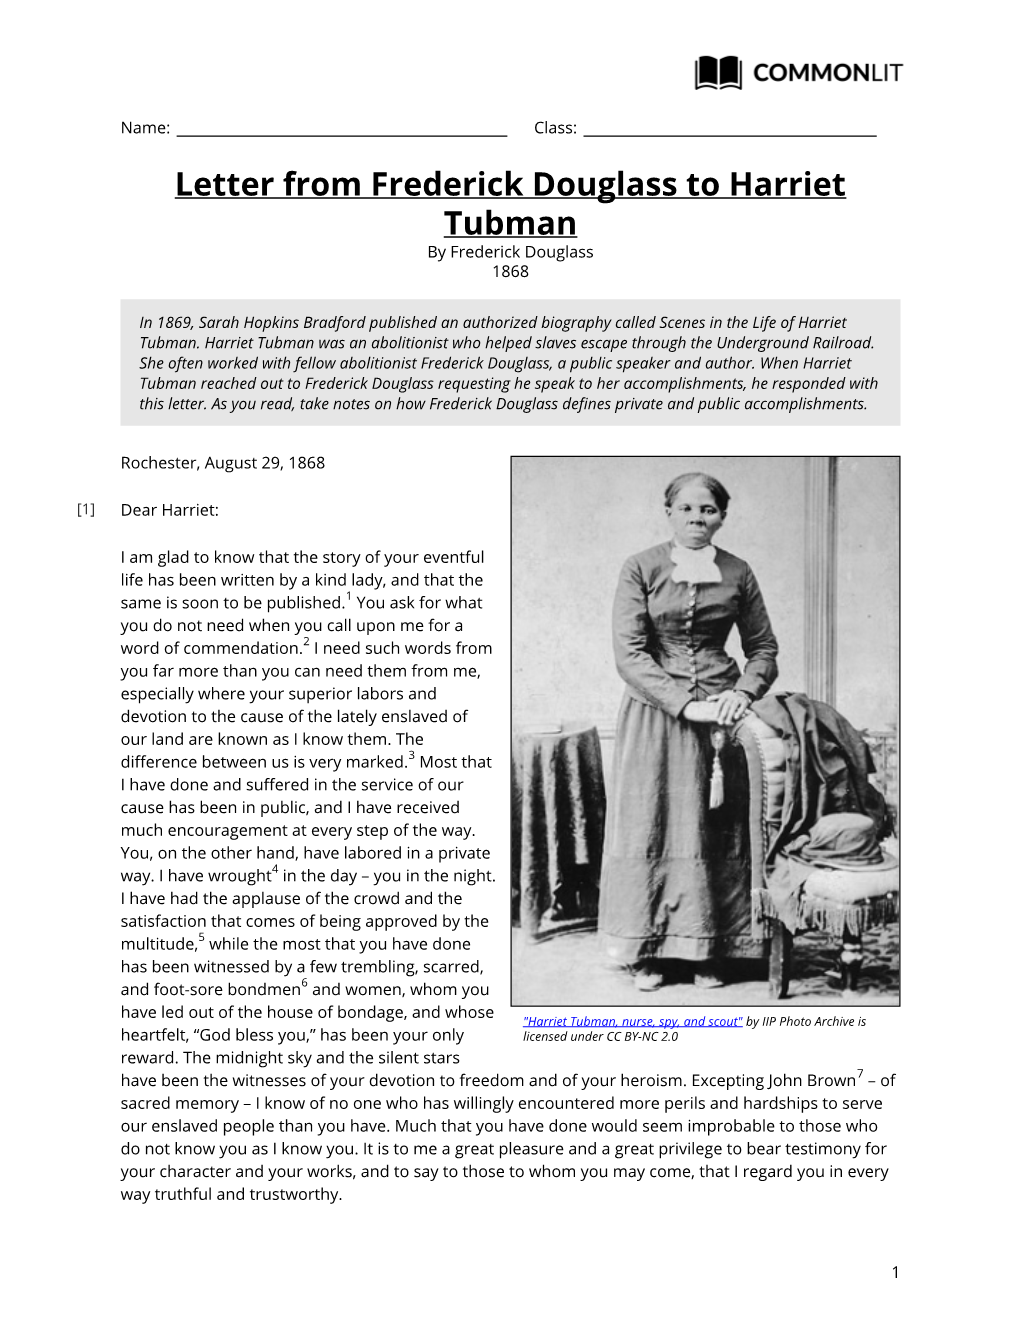 Commonlit | Letter from Frederick Douglass to Harriet Tubman